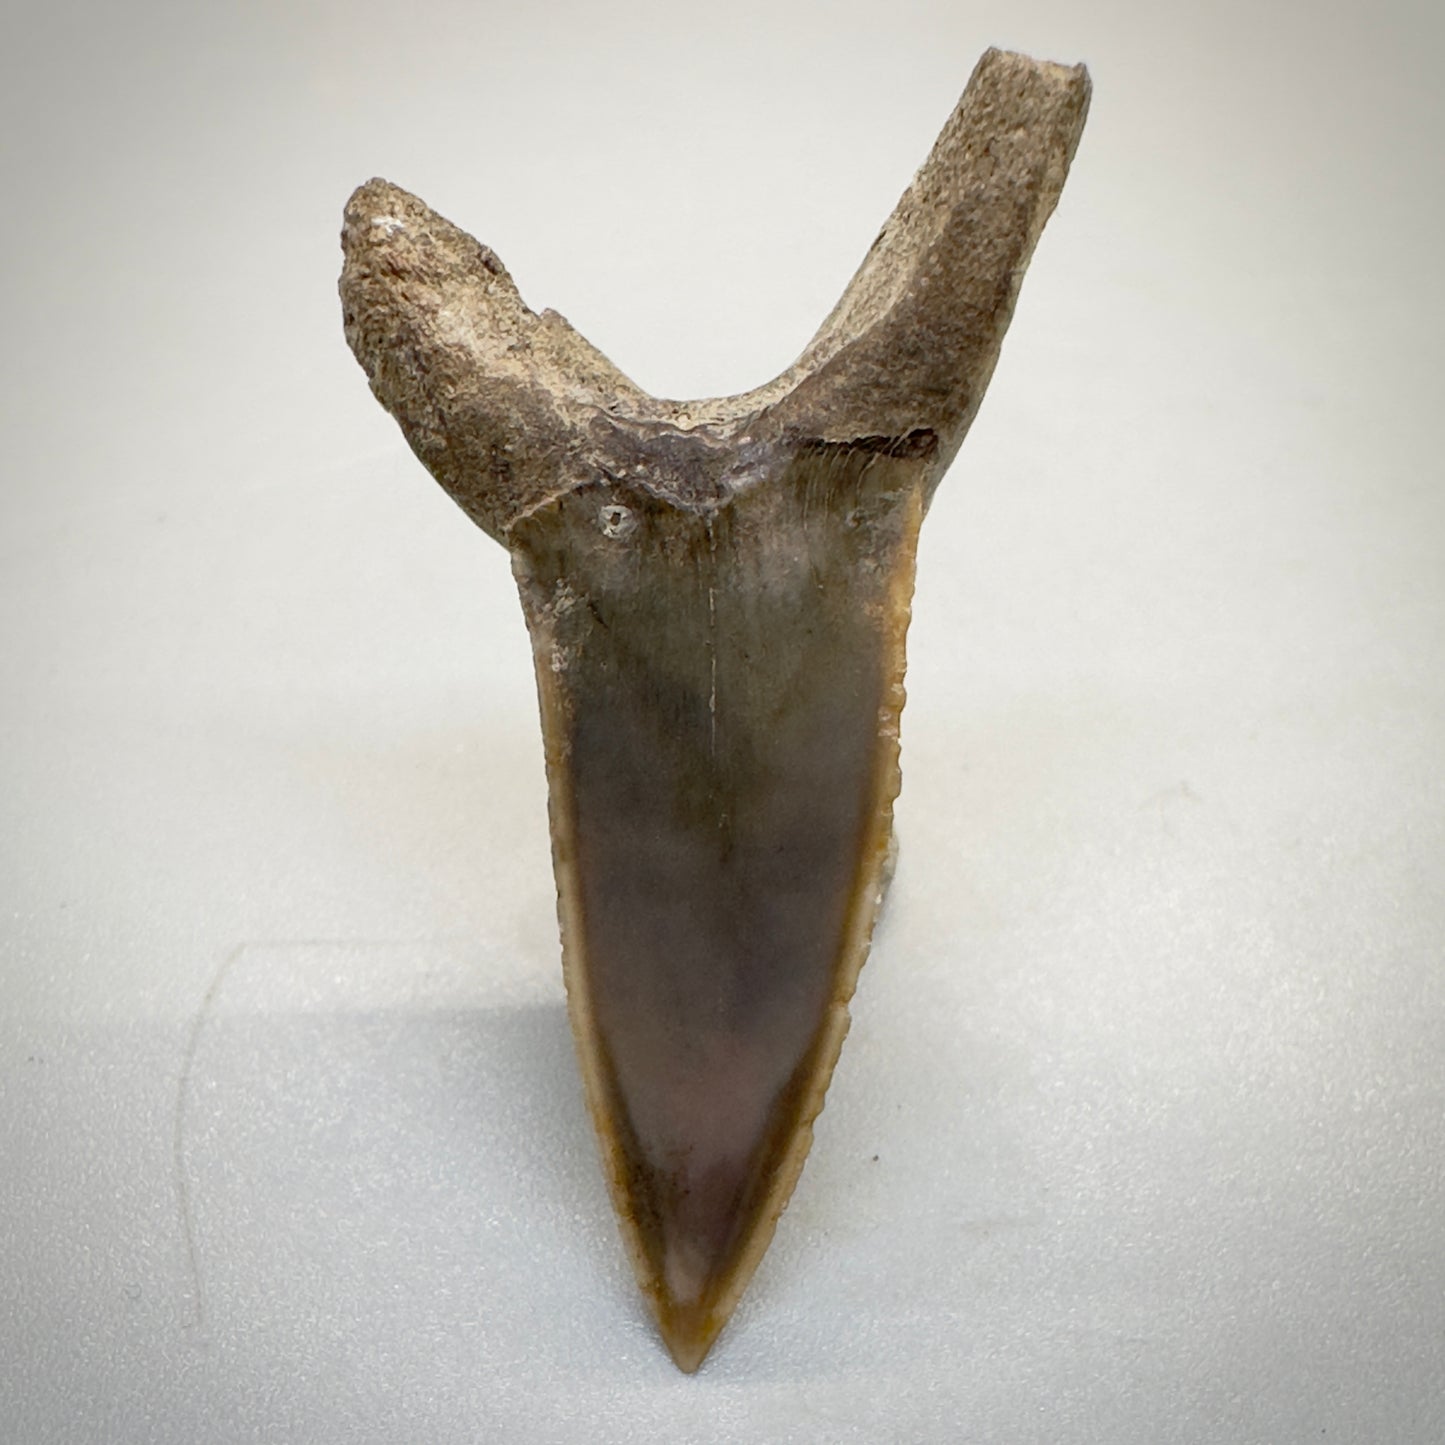 1.64 inches Extinct Longfin Mako Shark - Isurus retroflexus Shark tooth from Southeast, USA M520 back down